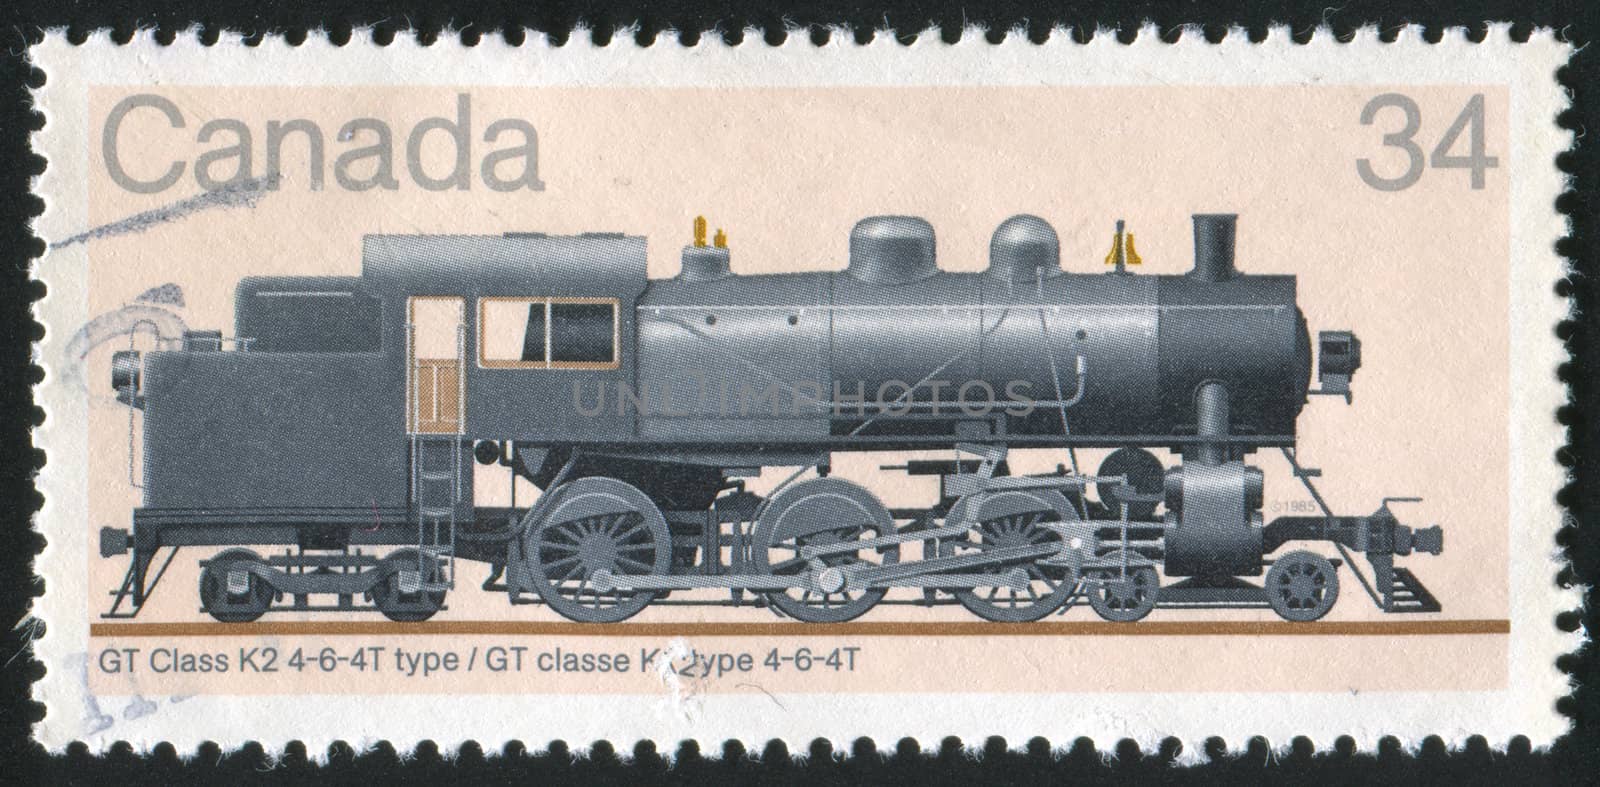 CANADA - CIRCA 1985: stamp printed by Canada, shows locomotive, circa 1985